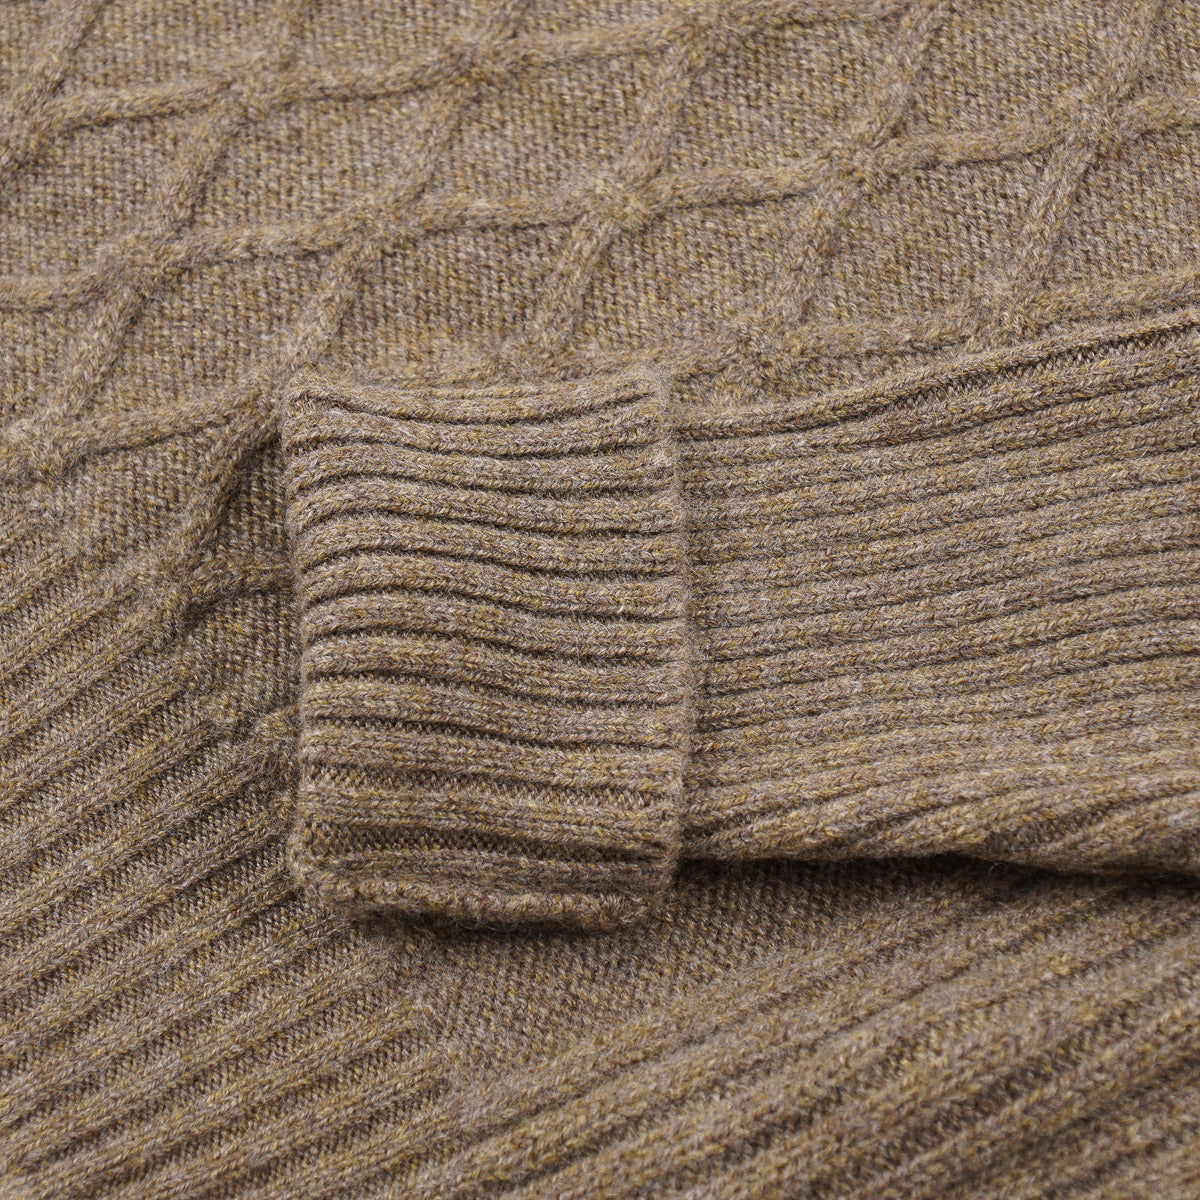 Kiton Diamond Knit Cashmere Sweater - Top Shelf Apparel